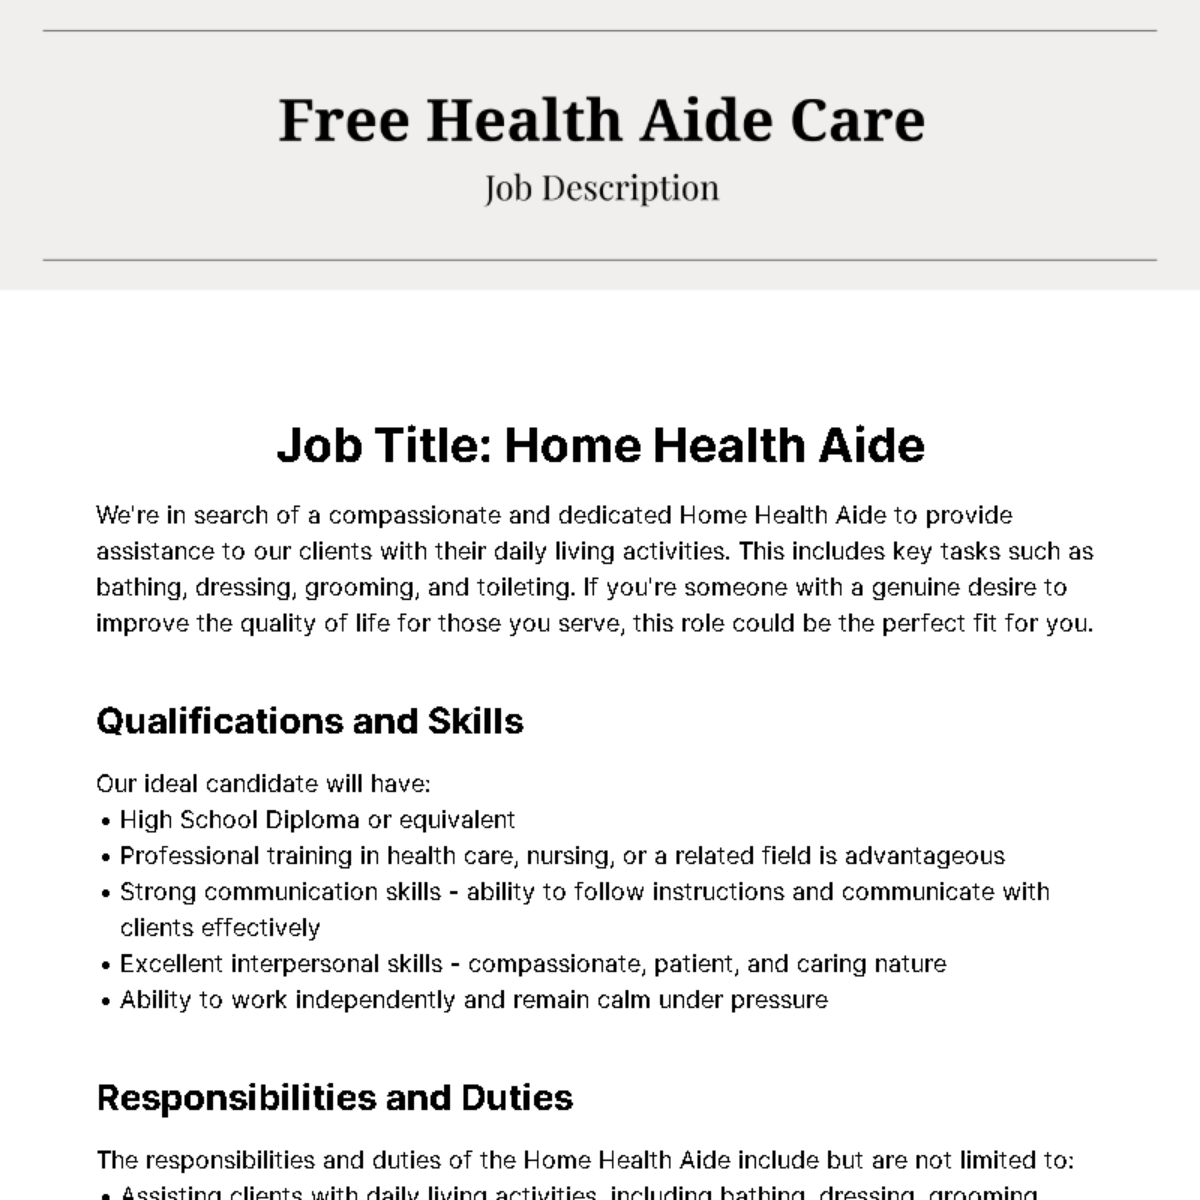 Free Health Aide Care Job Description Template